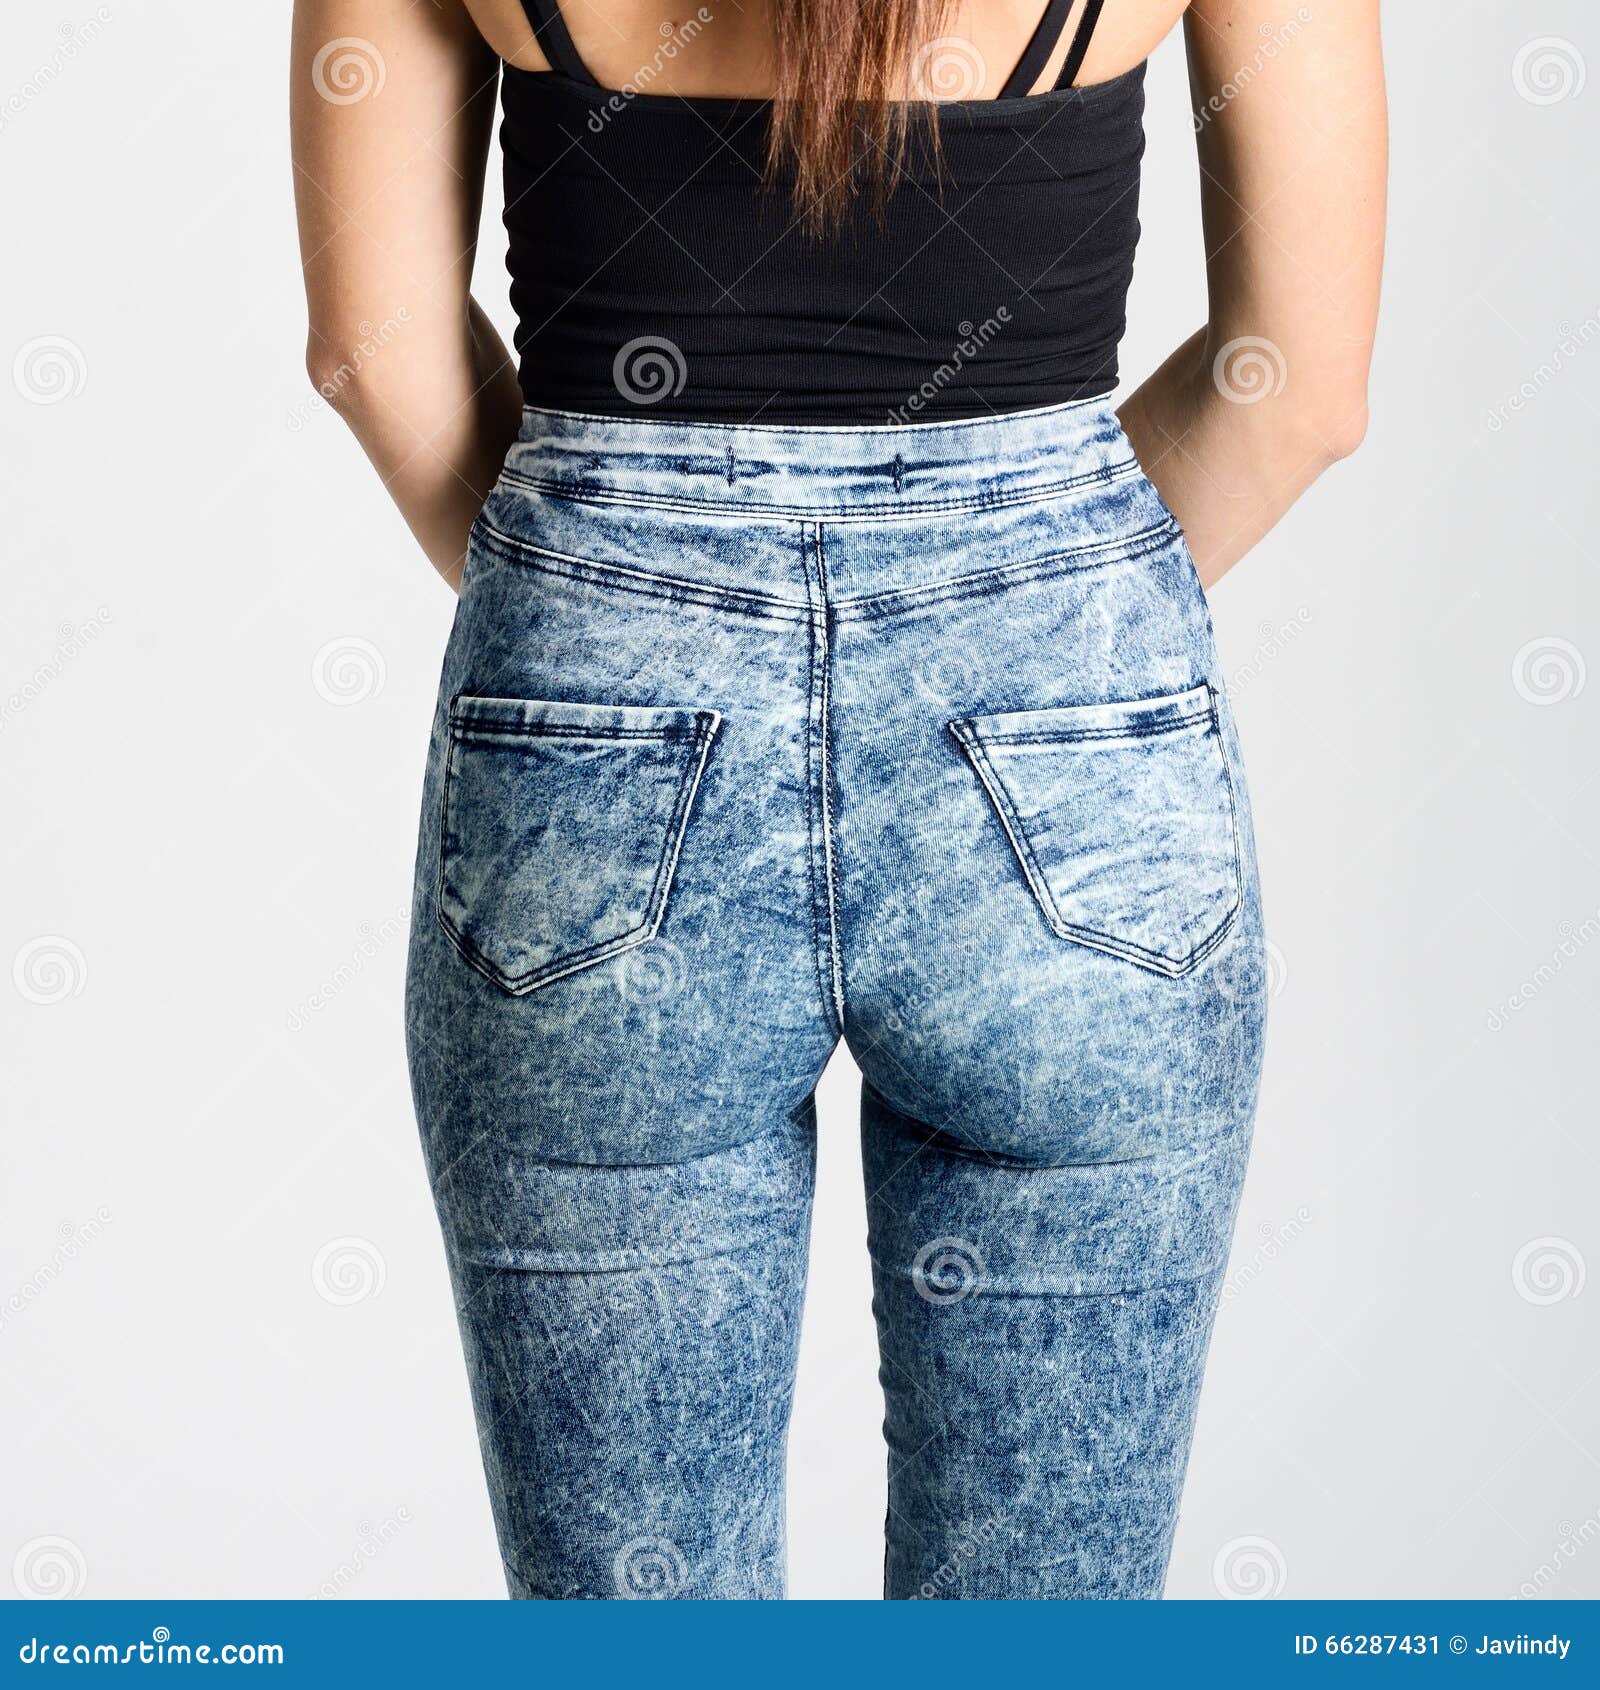 barbara ellen spence share photos of women in tight jeans photos